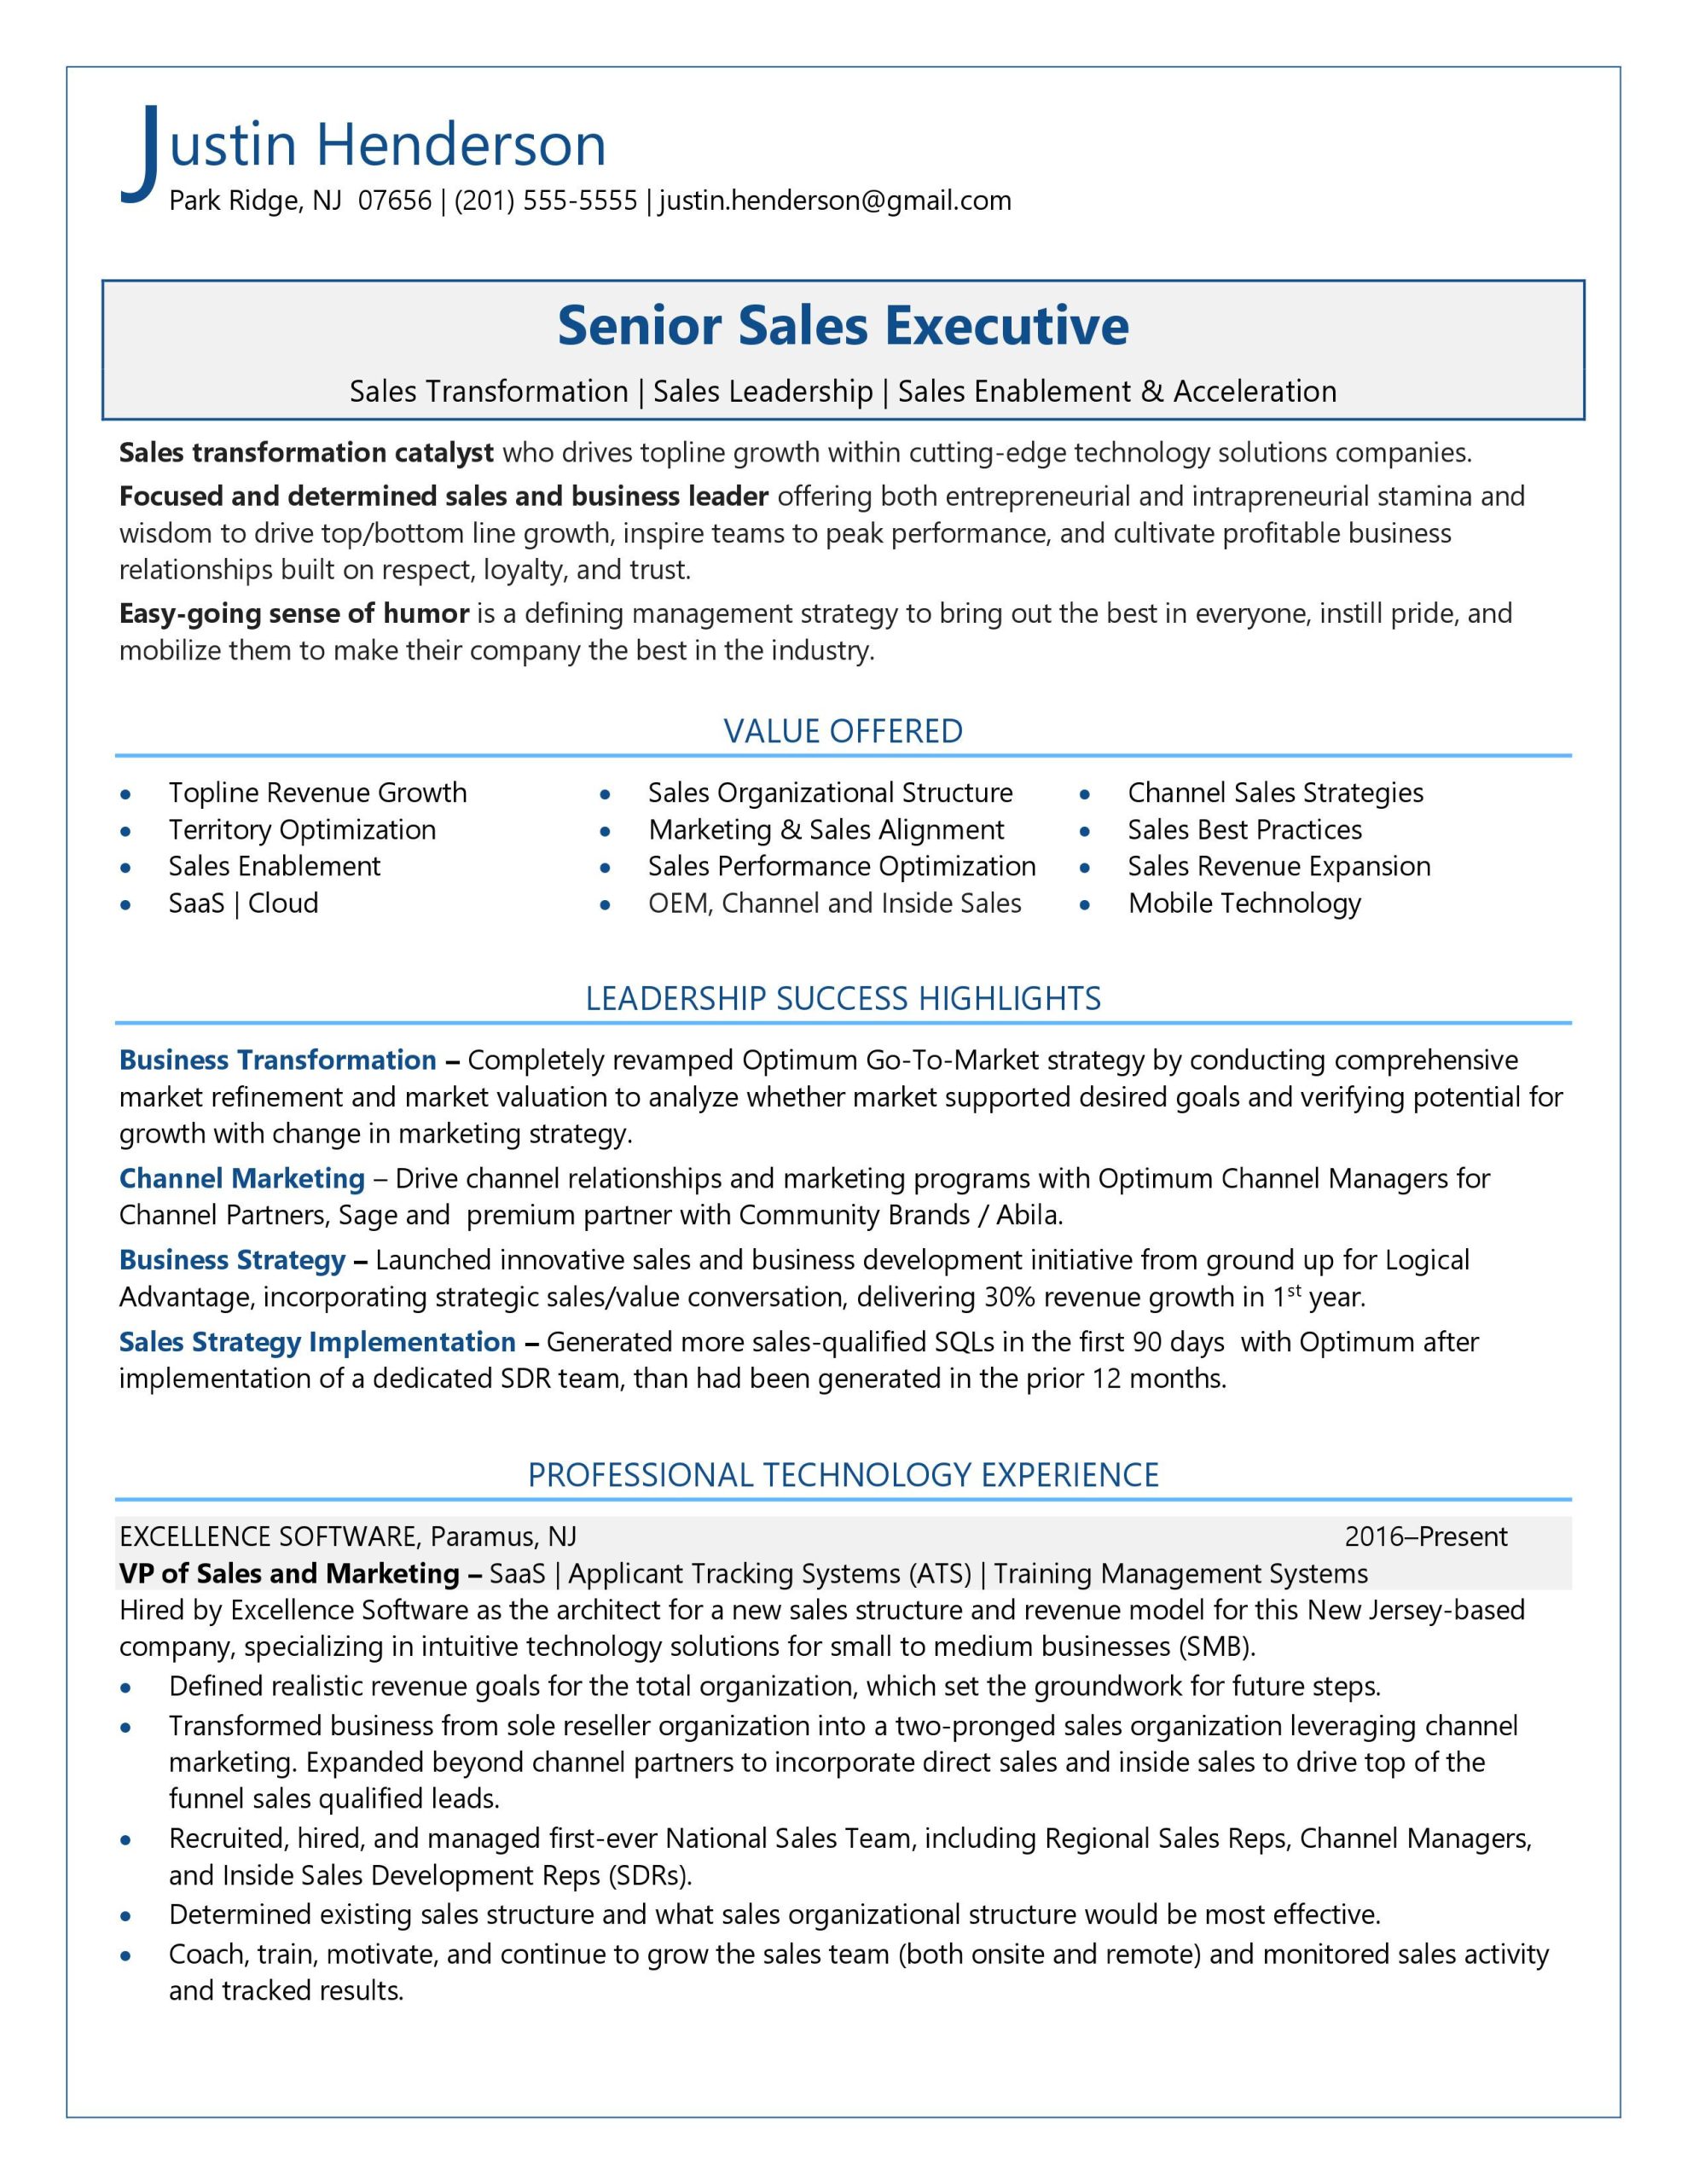 Sample Resume for Senior Sales Professional Resume Examples Sales Profesional